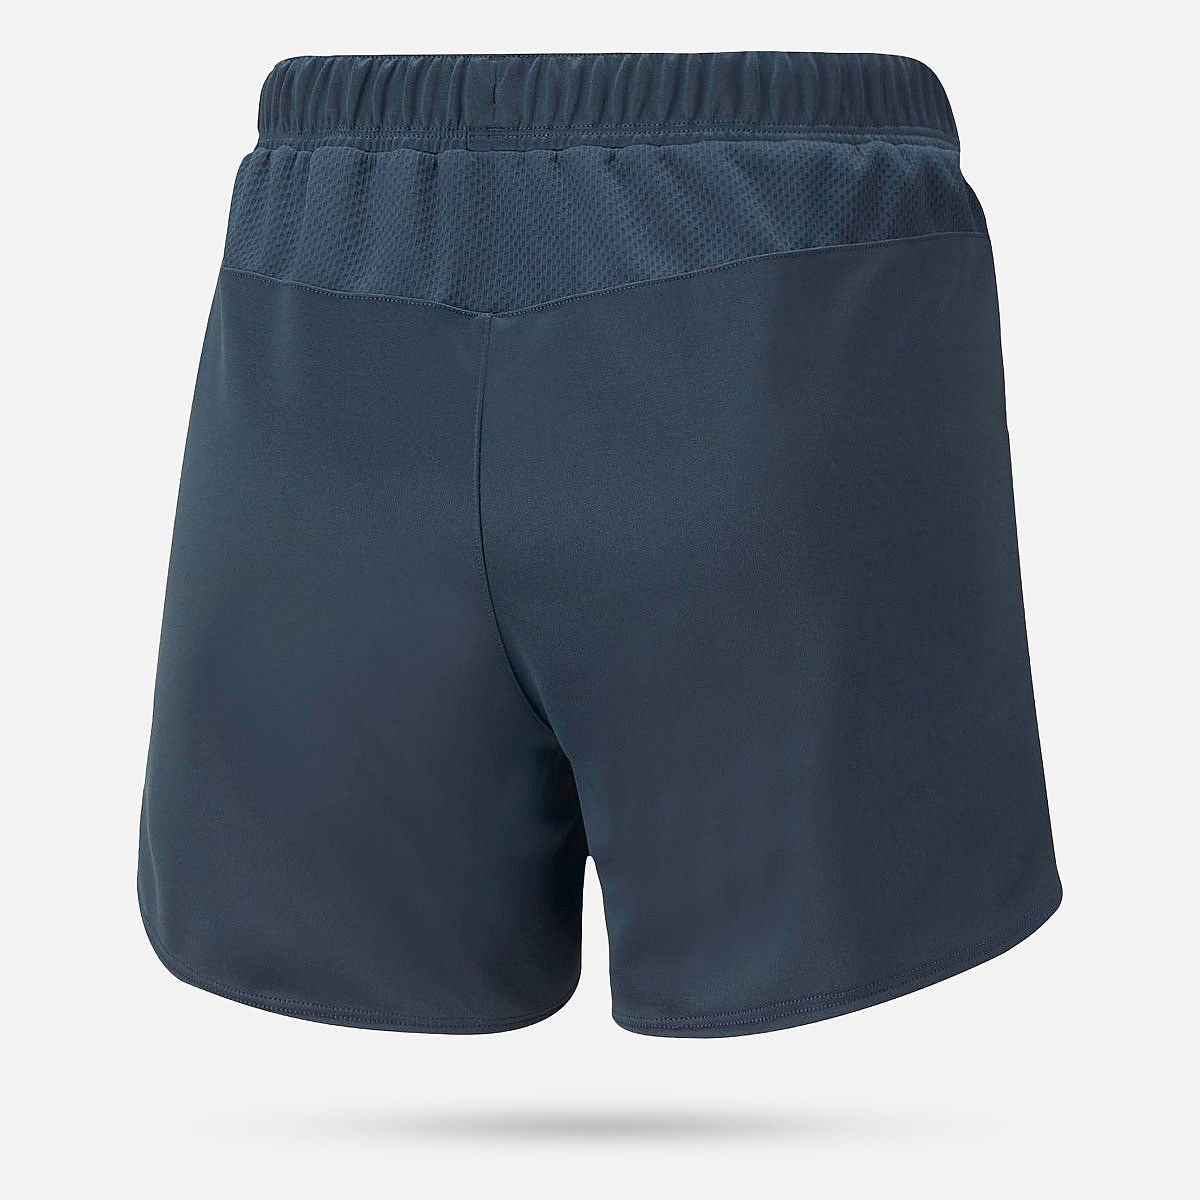 AN296486 Individualblaze Shorts